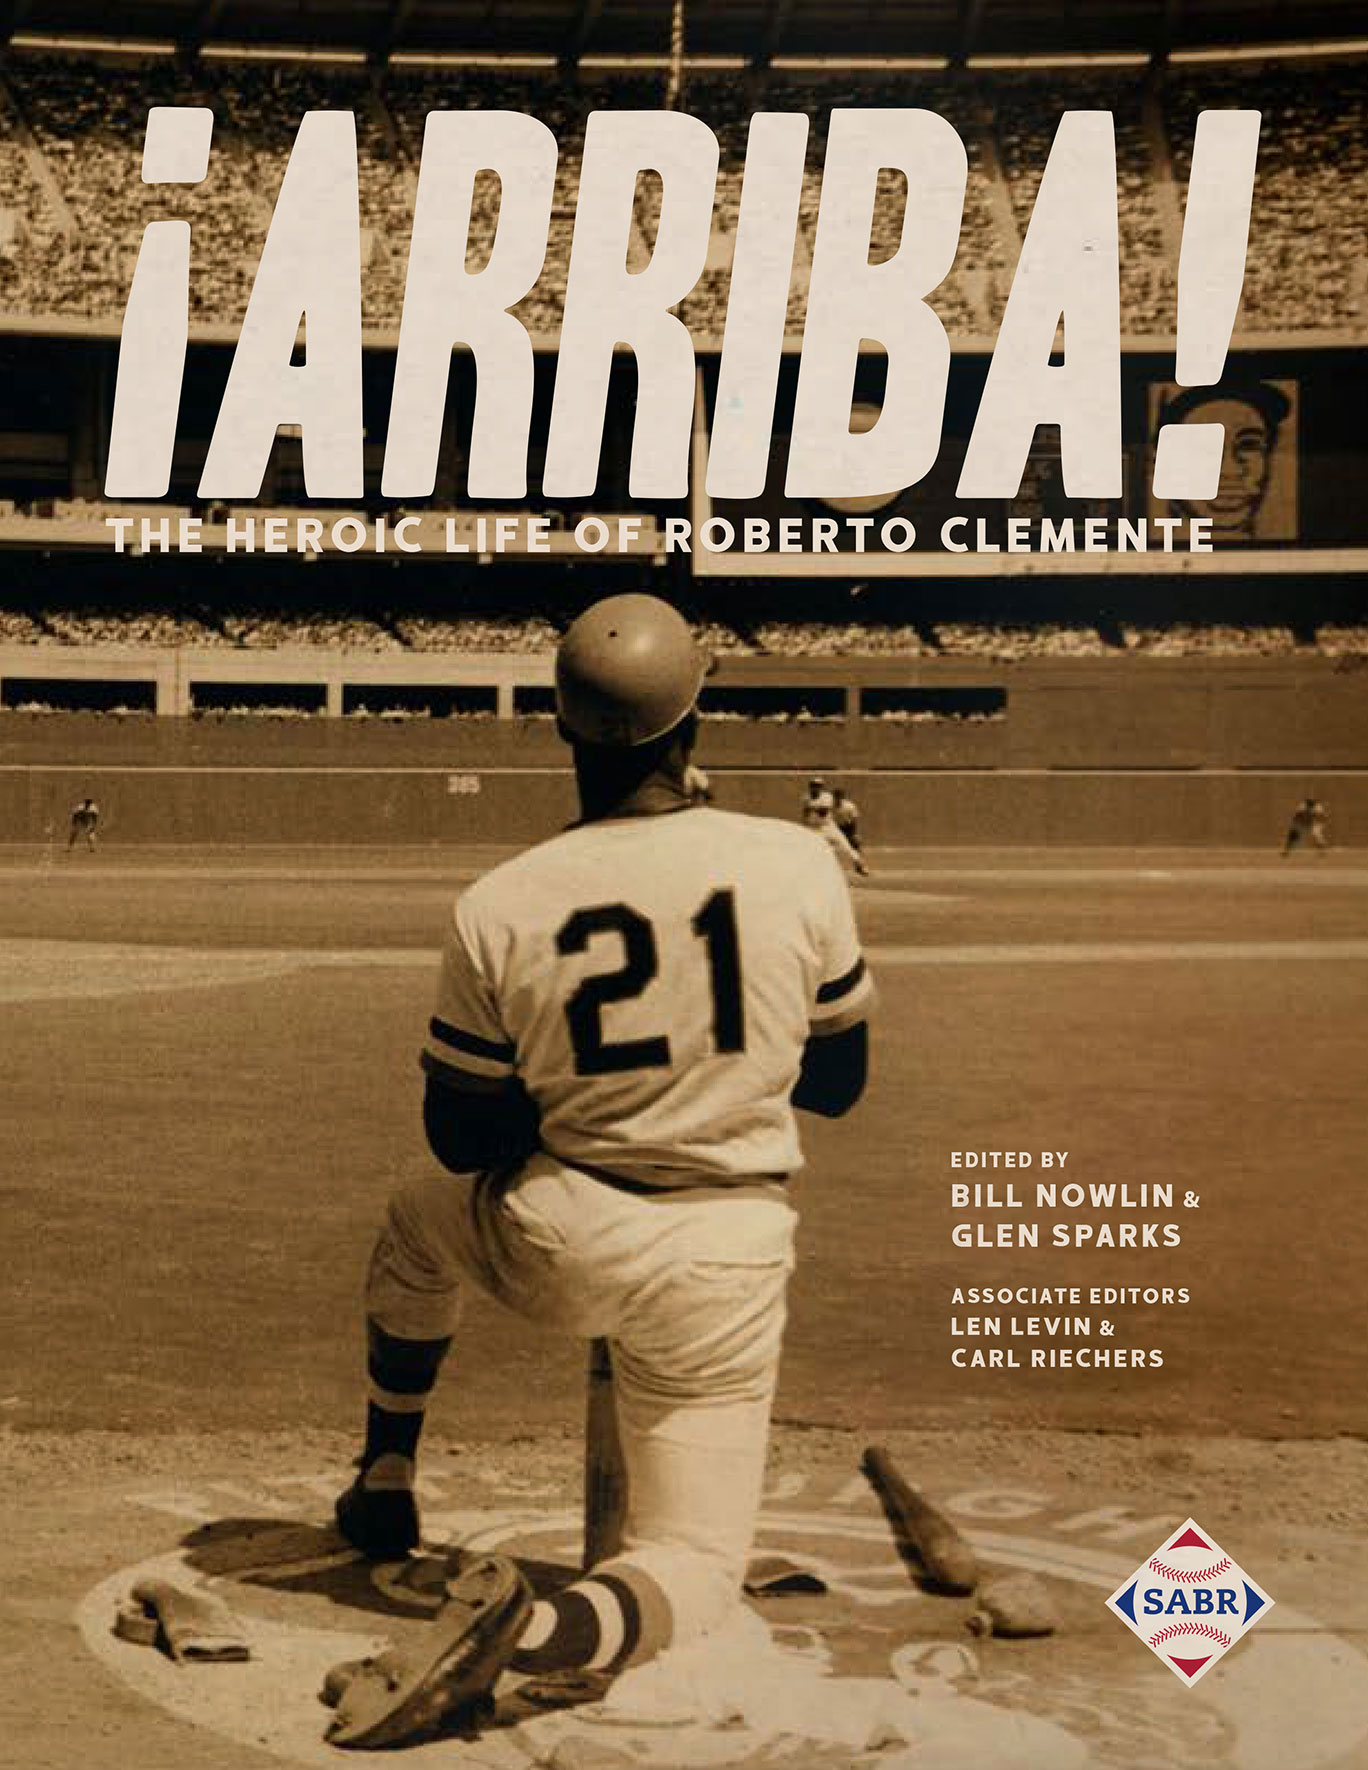 Arriba! The Heroic Life of Roberto Clemente